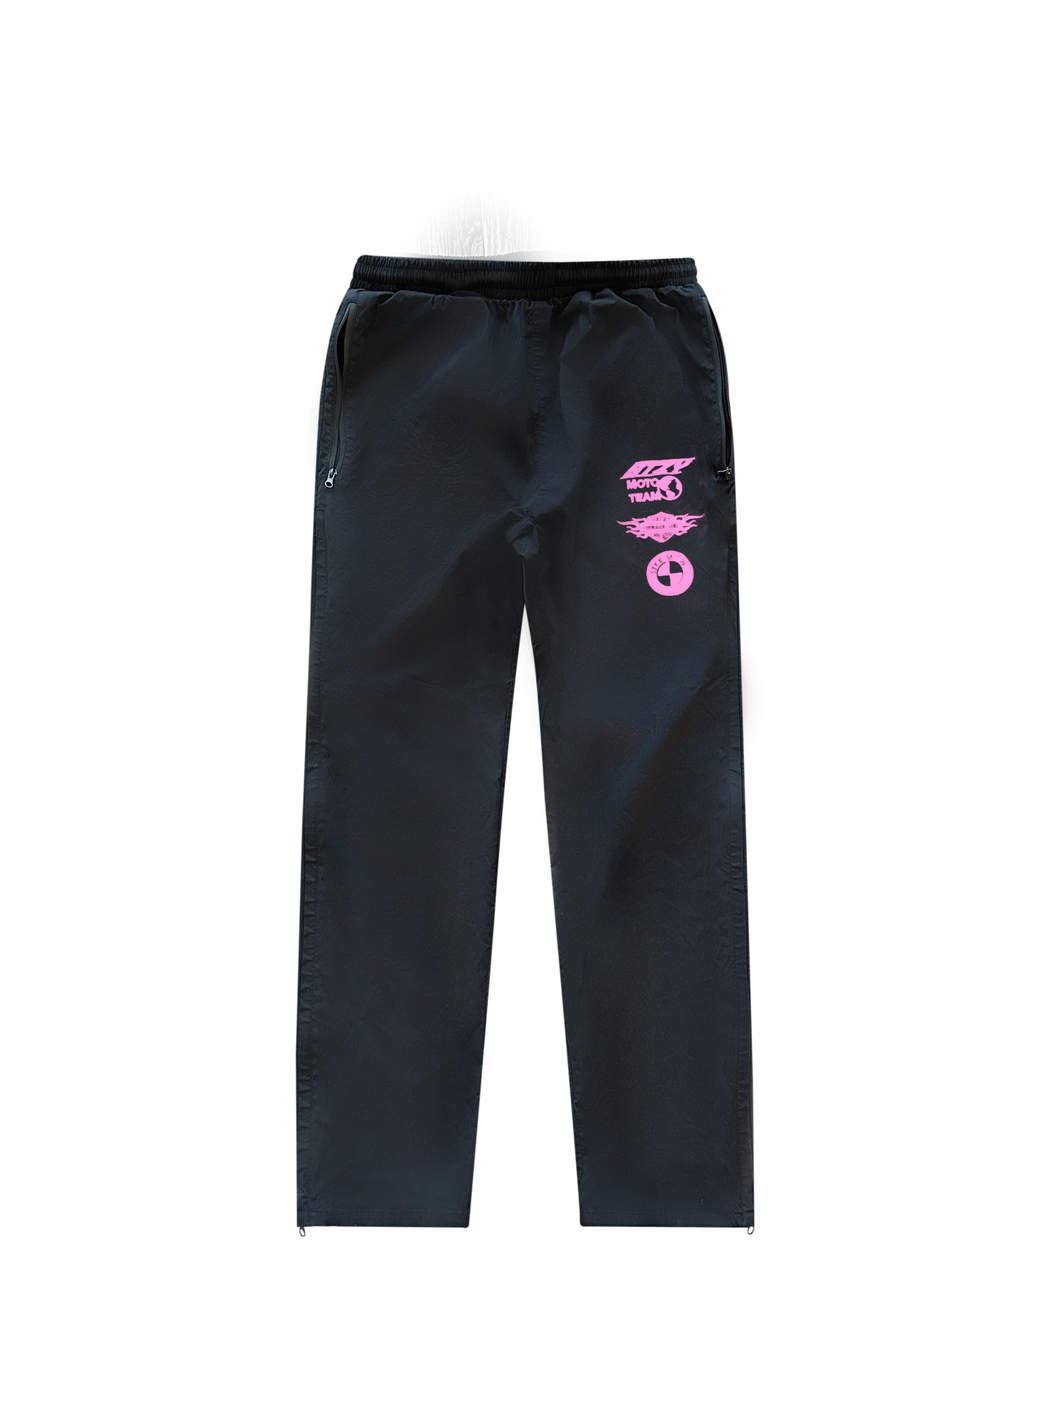 Black track pants w/ pink stee logos